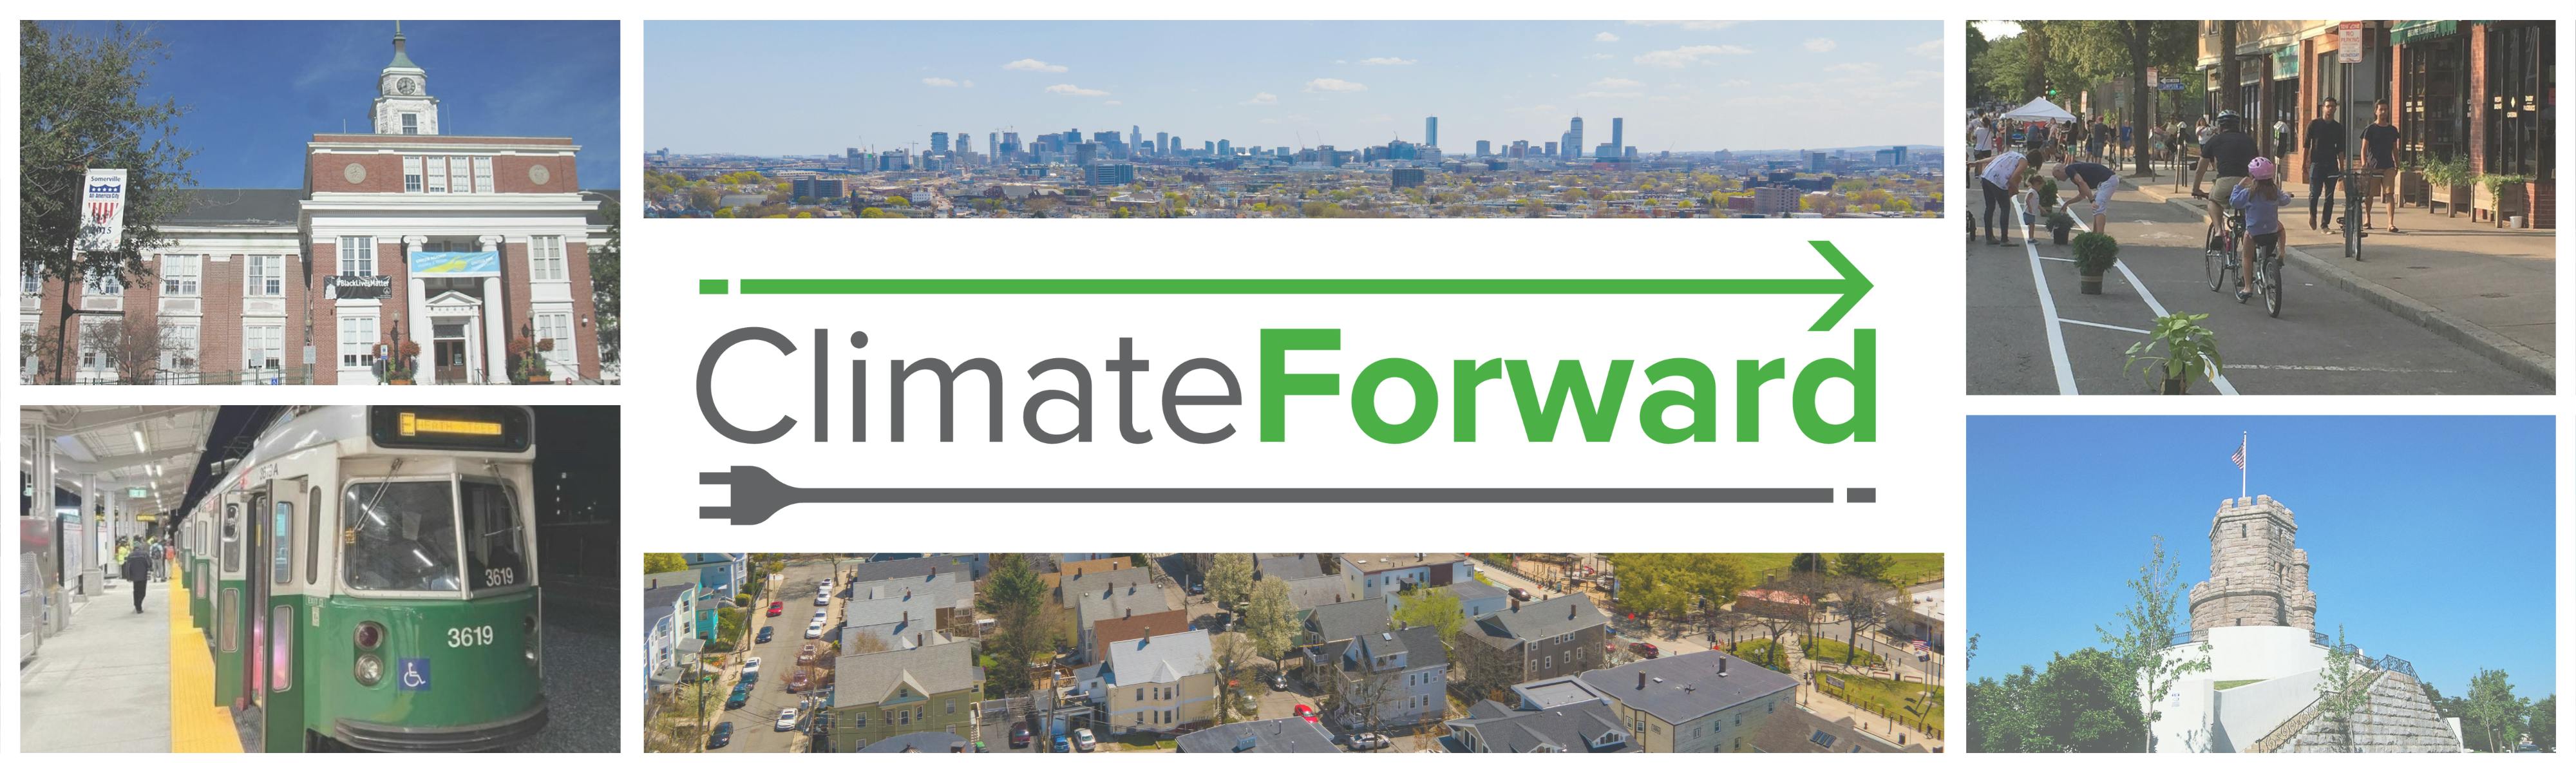 Climate Forward logo